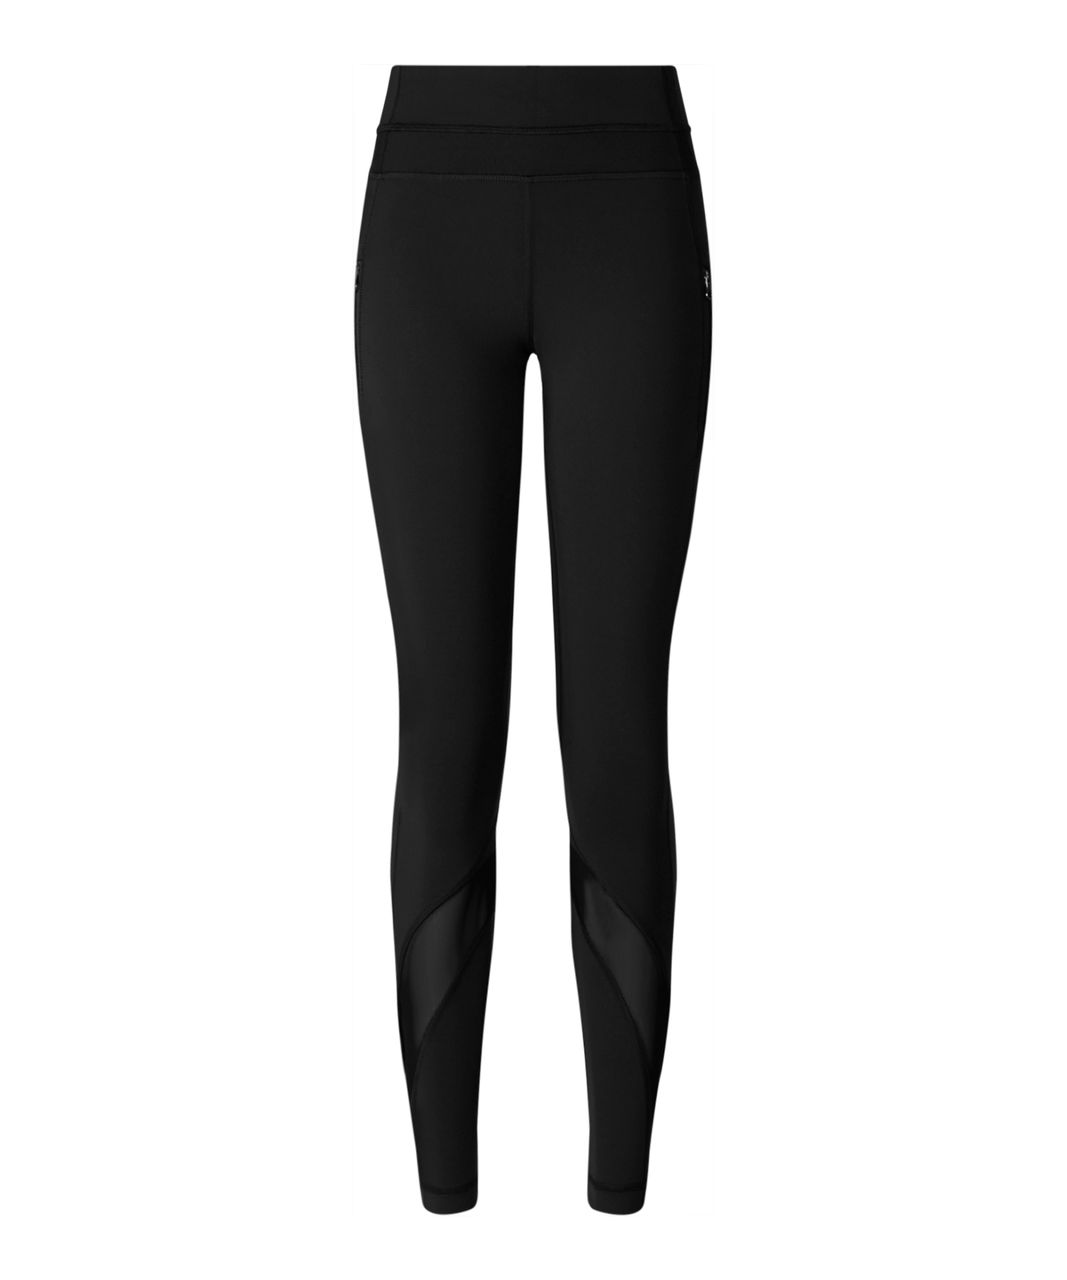 lululemon black leggings